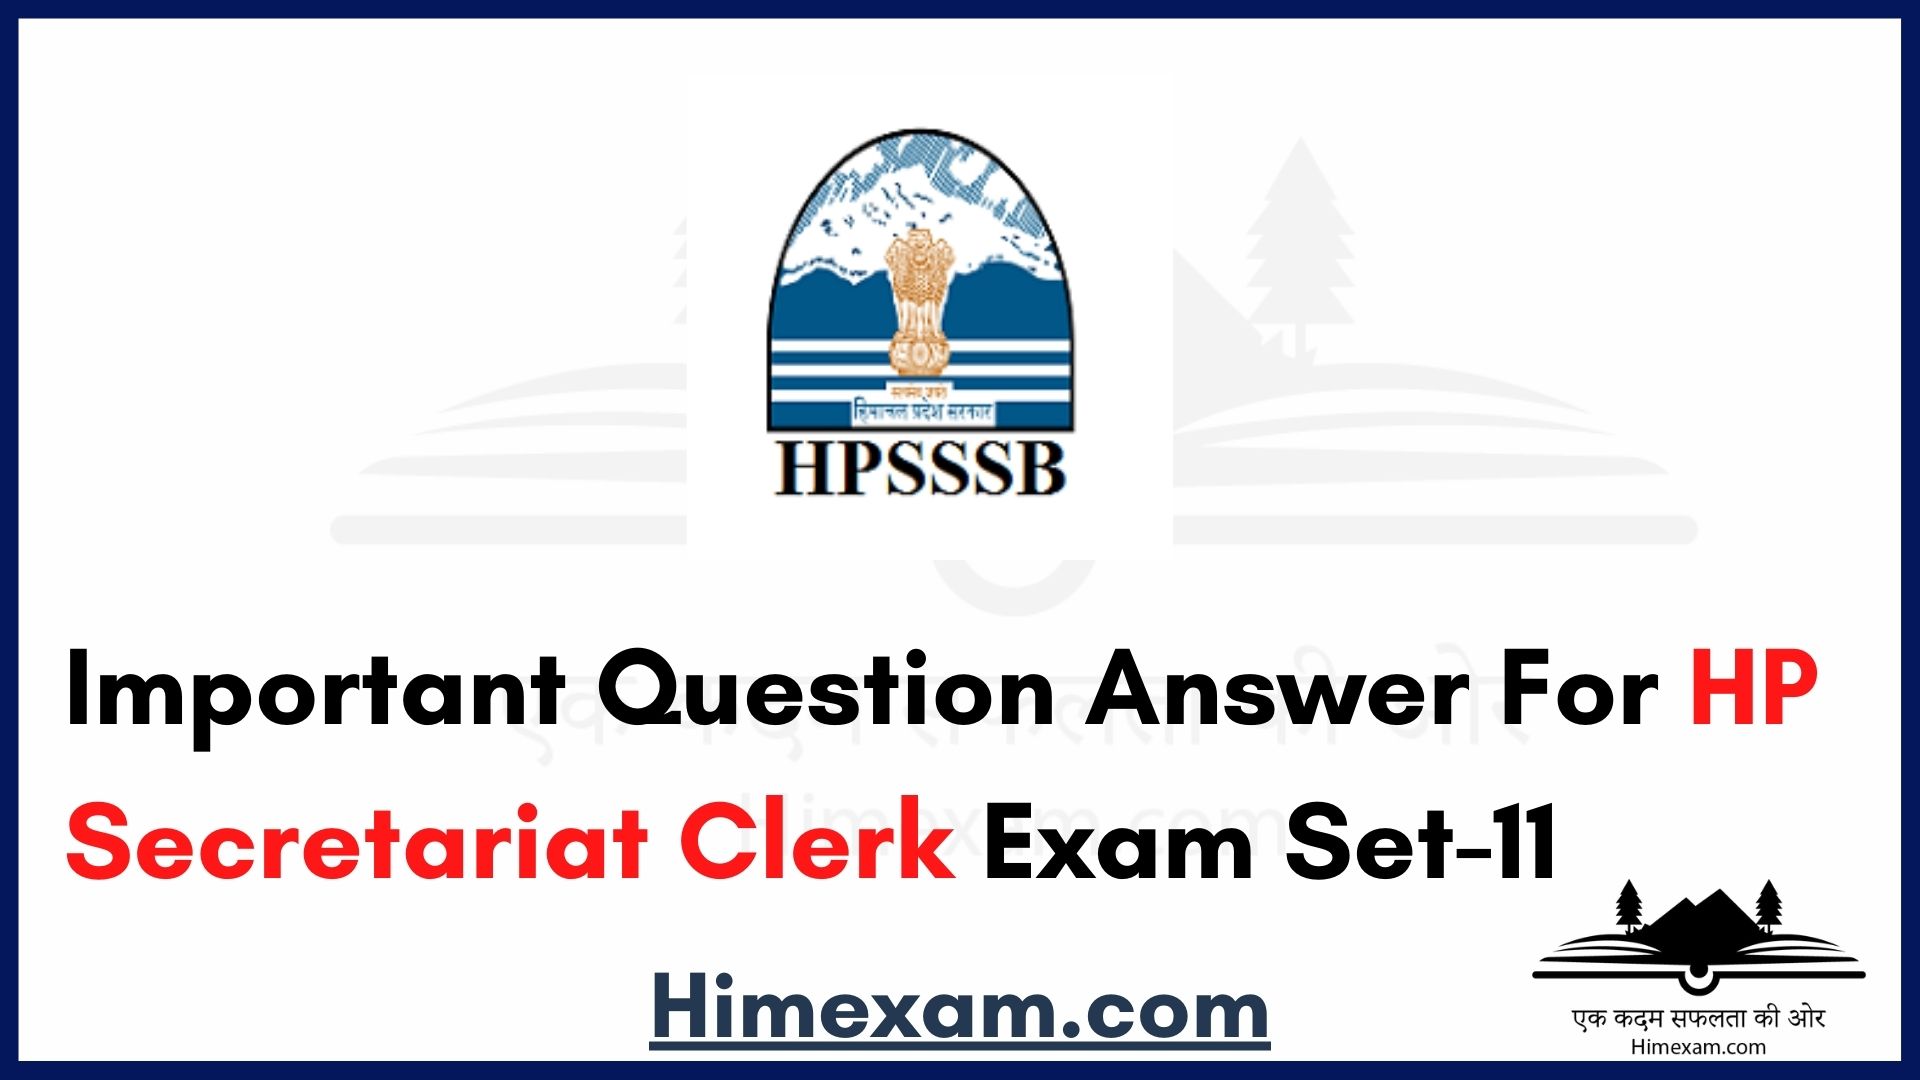 Important Question Answer For HP Secretariat Clerk Exam Set-11